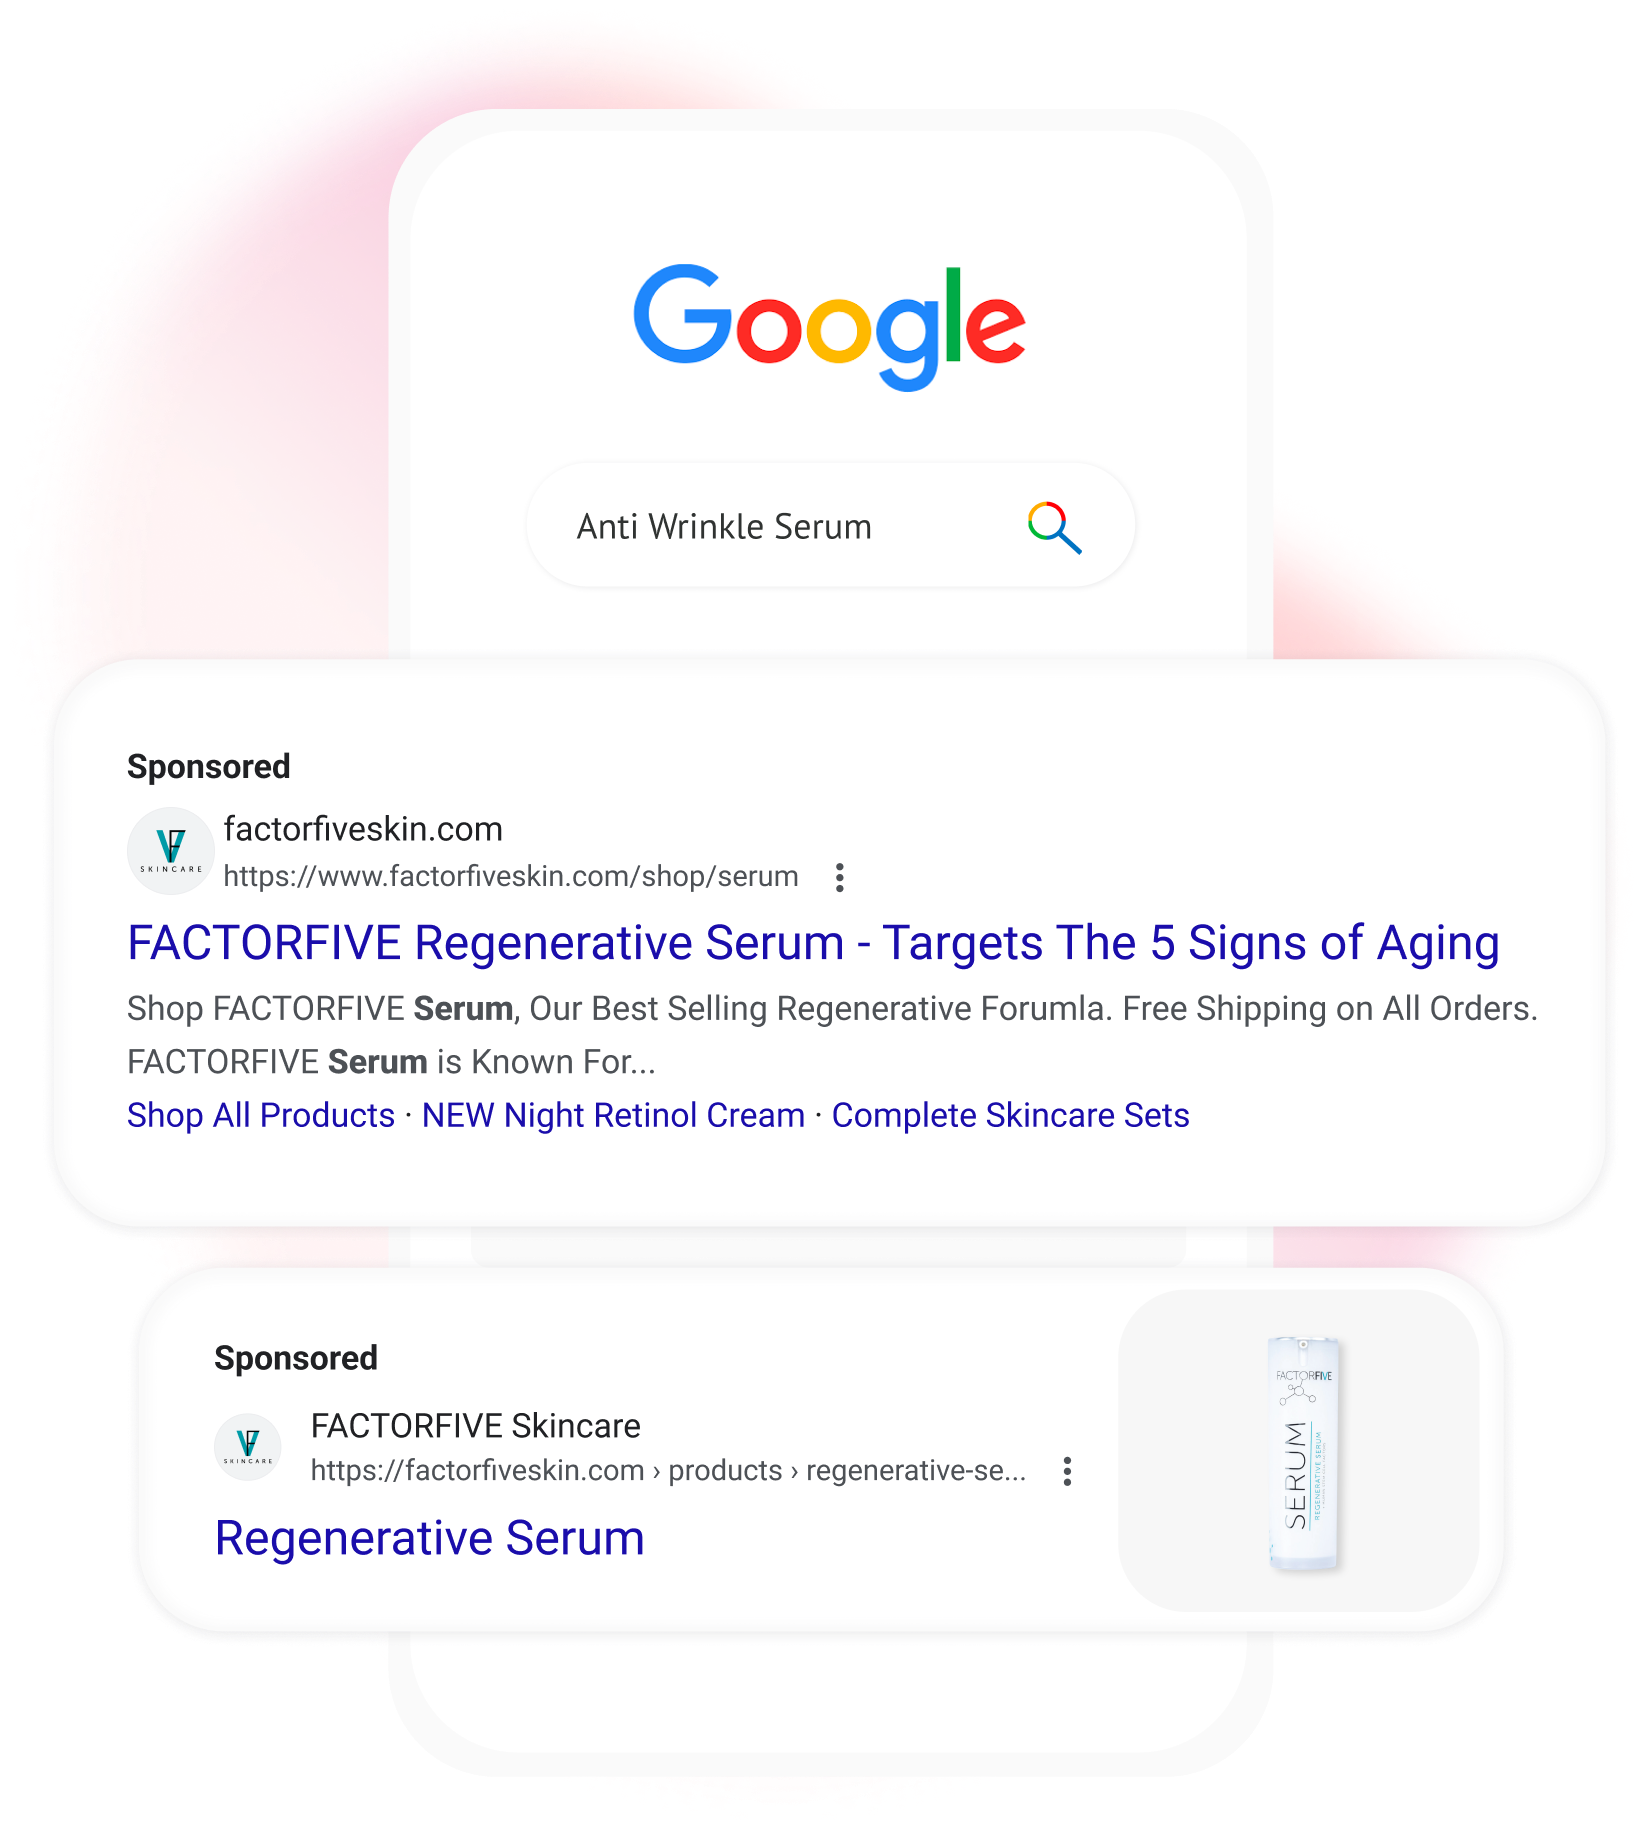 Google Search ads for FactorFive's serum, showcasing digital skincare marketing.